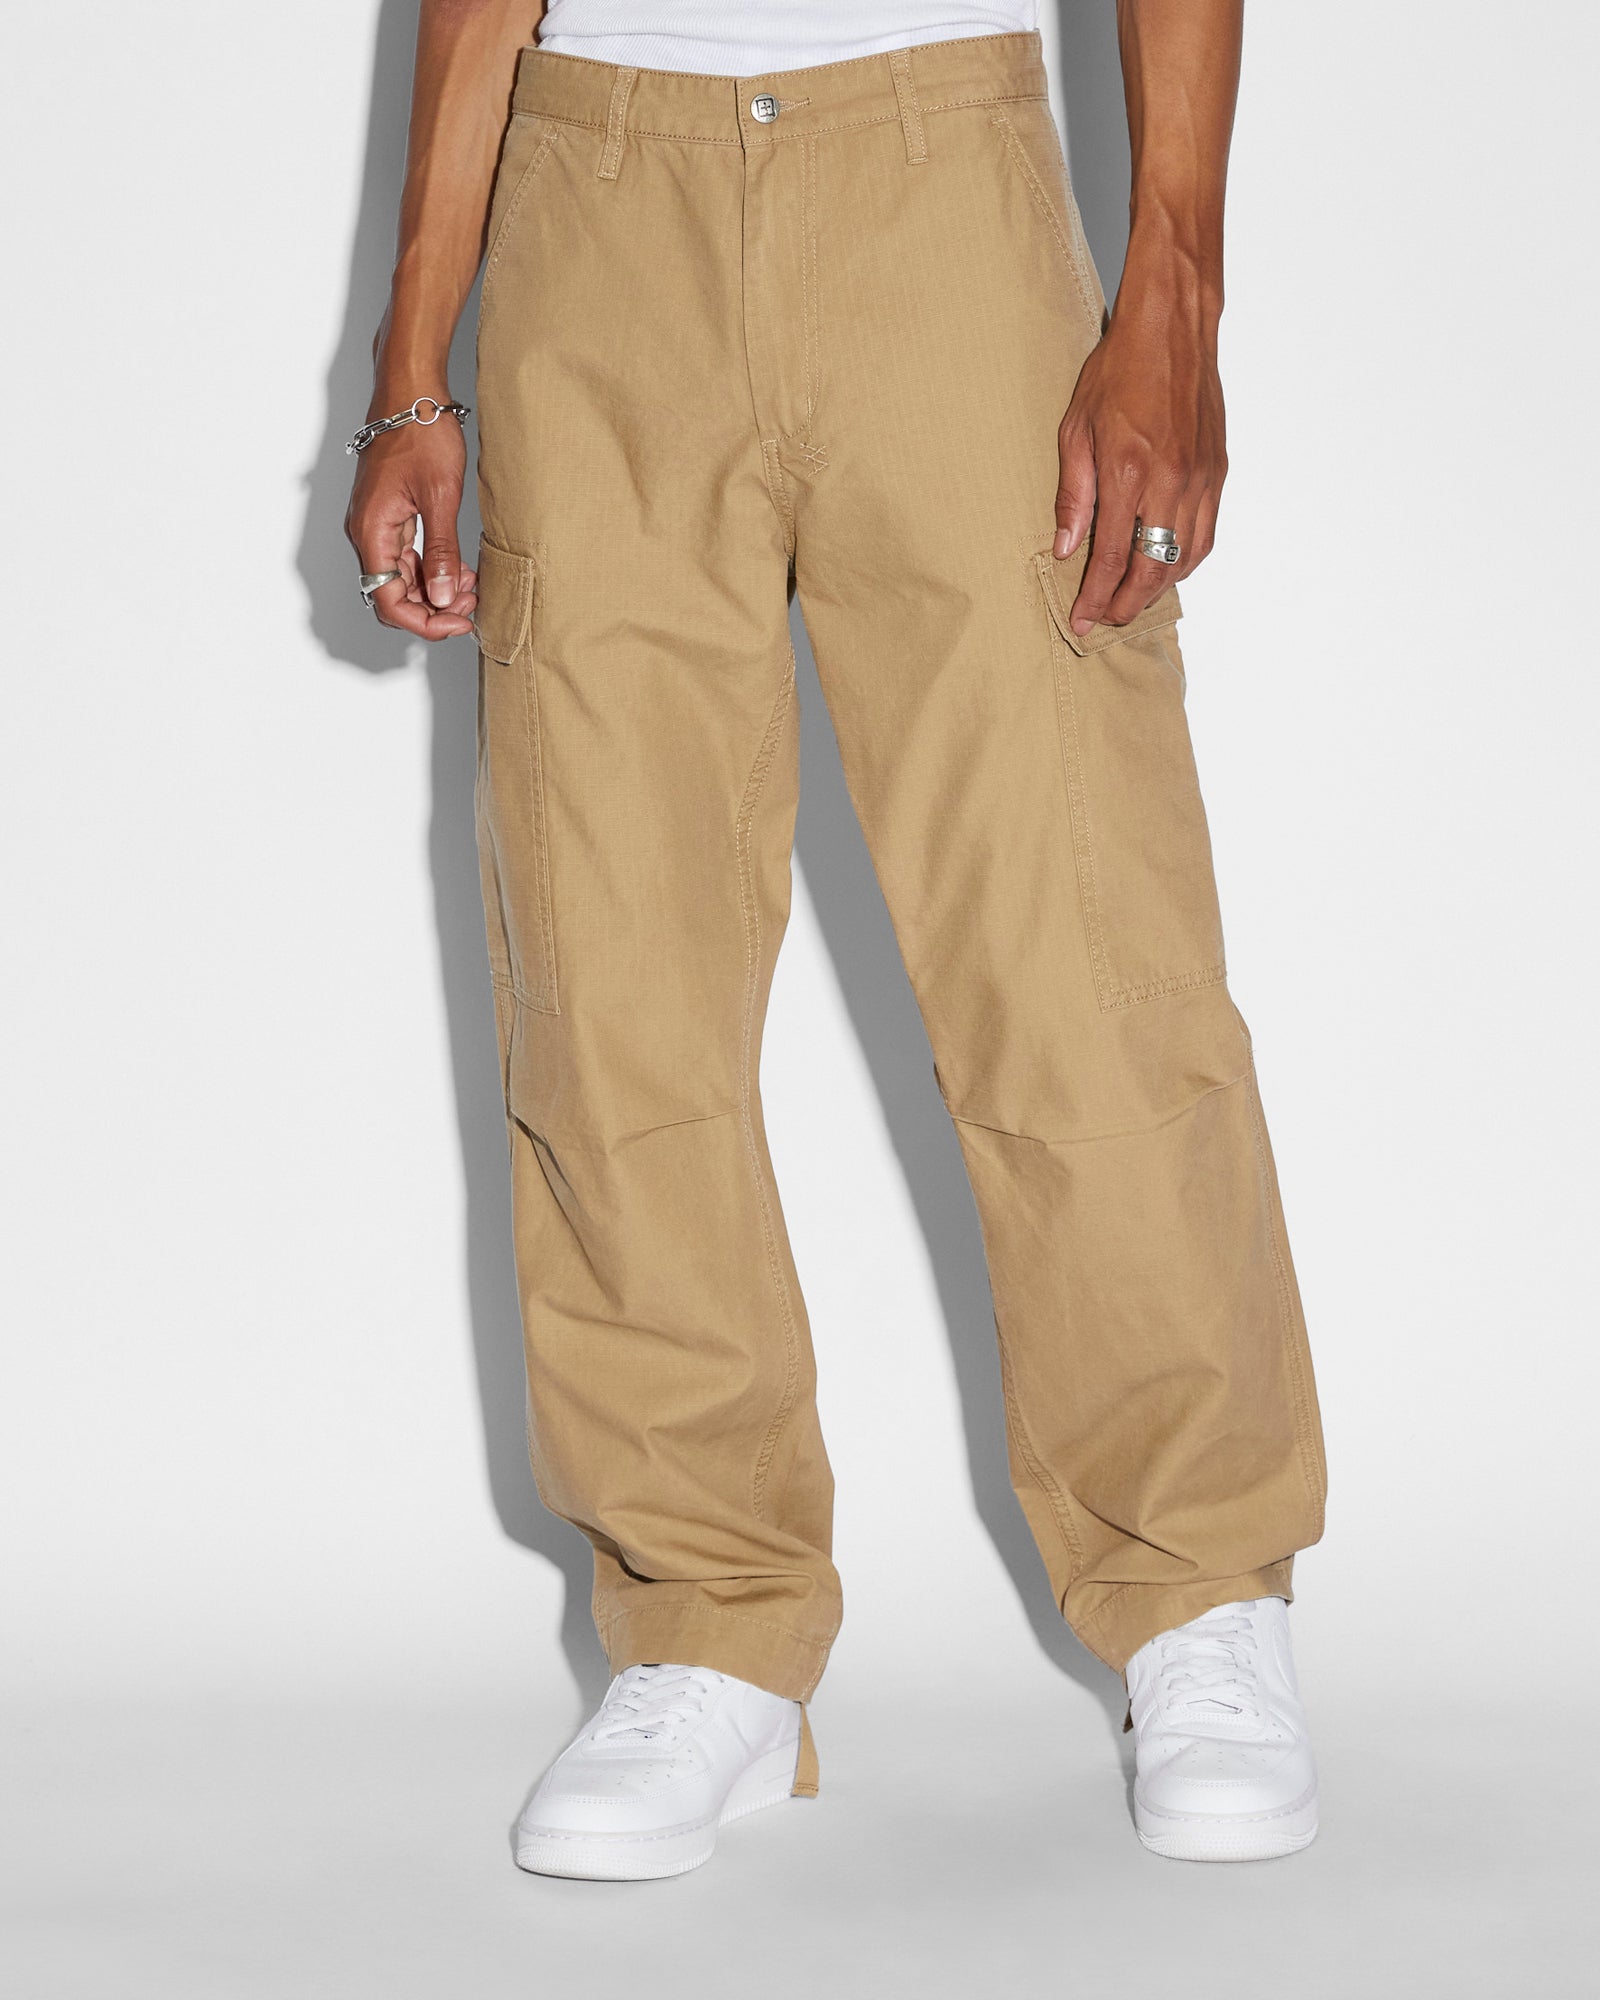 Kmart Basic Editions Flat Front Men’s Cargo Khaki Pants 38 x 30 W Thigh  Pocket